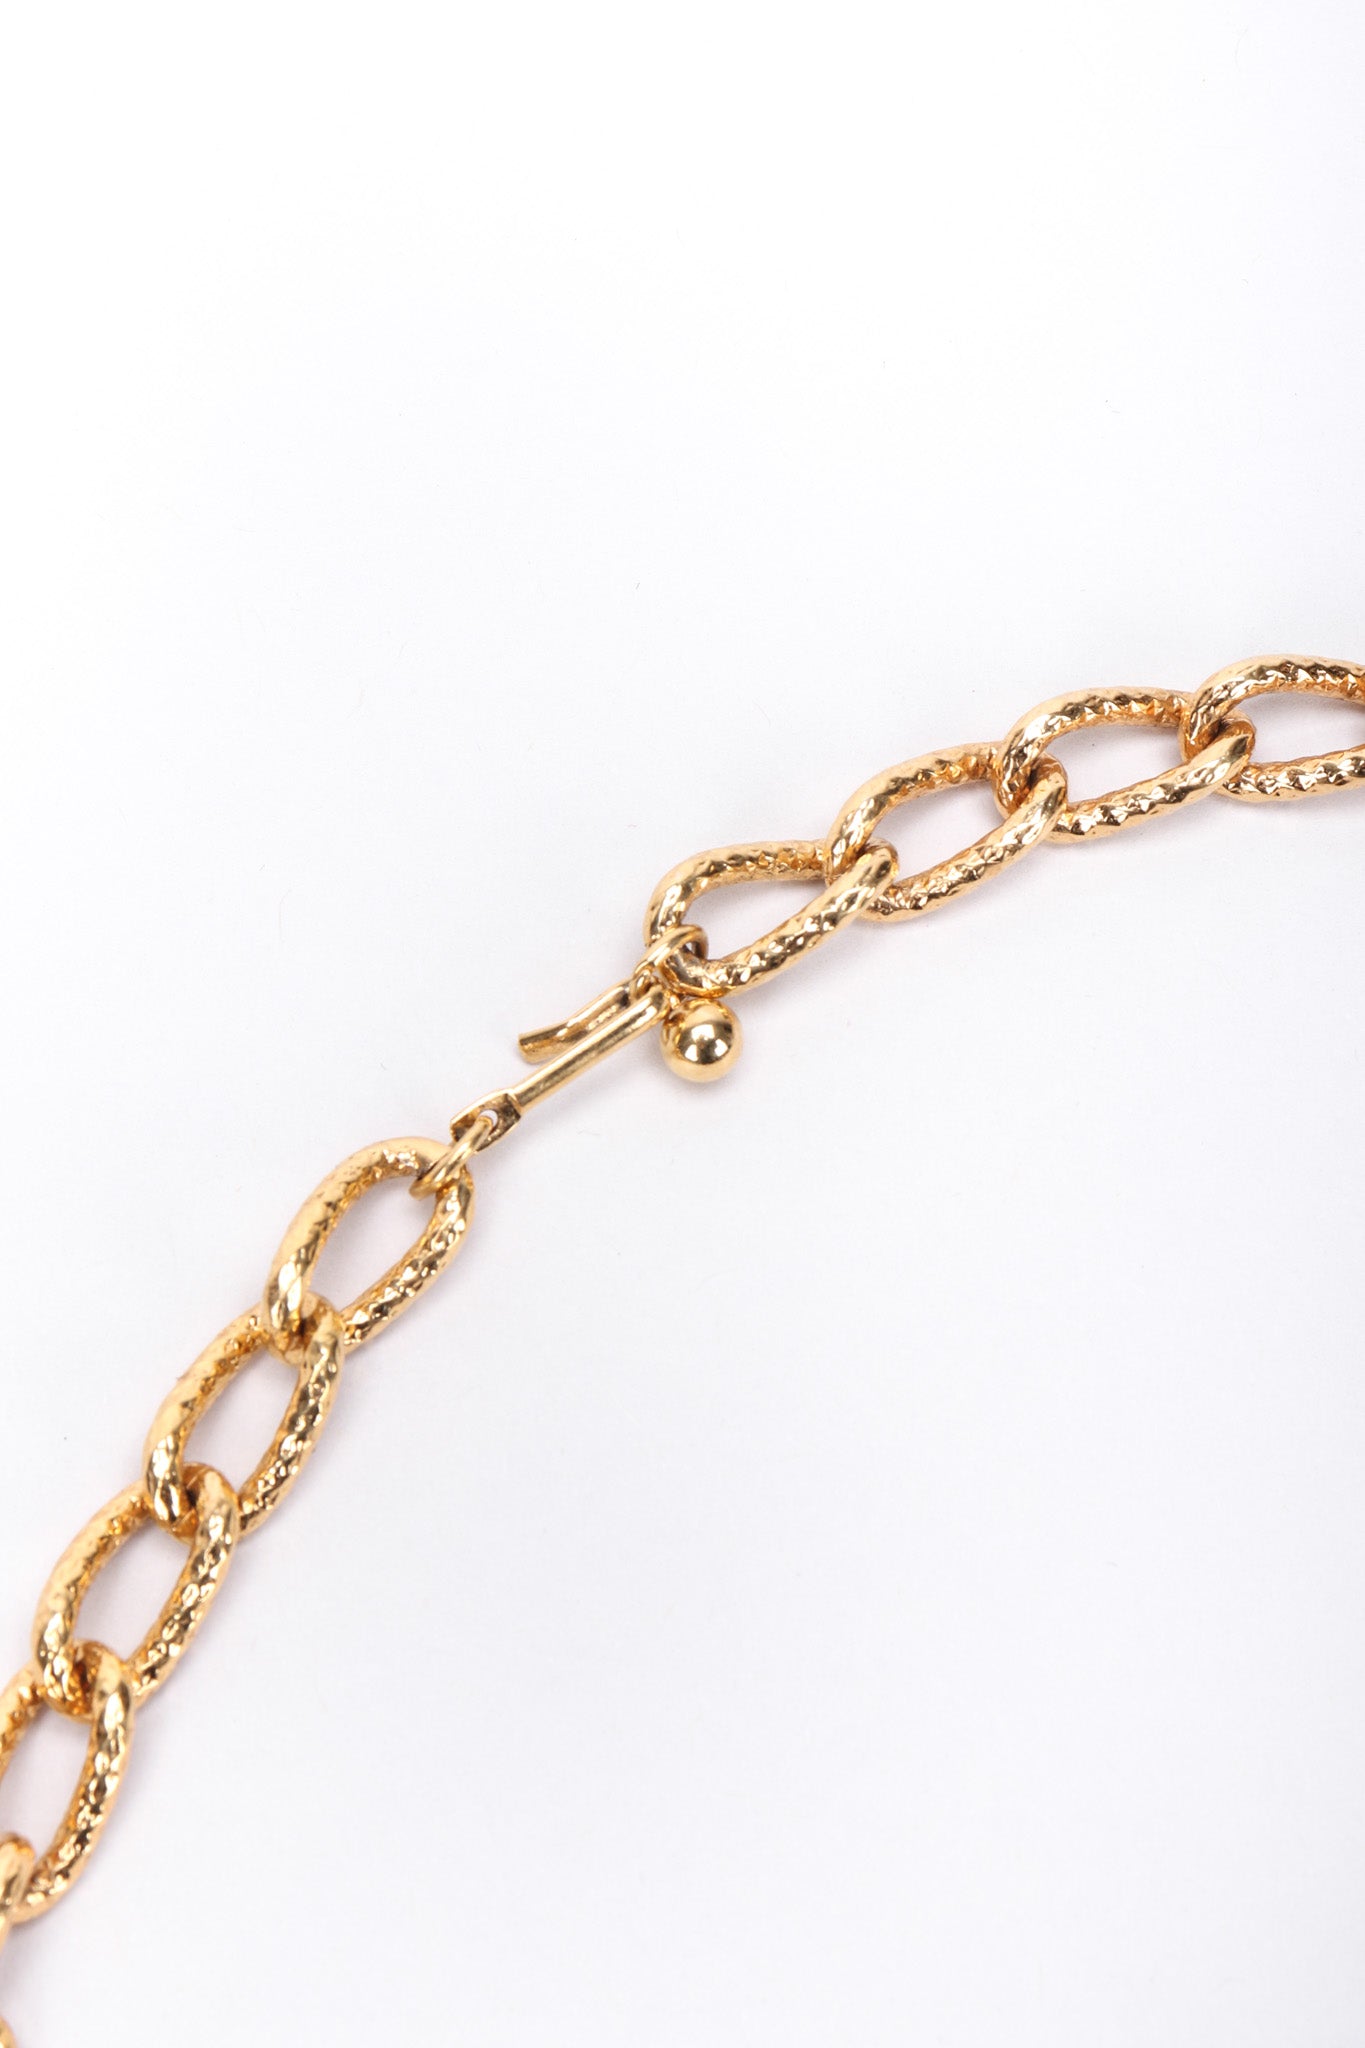 Recess Los Angeles Vintage Kenneth Jay Lane Avon Multicolor Jewel Ton Resin Gold Link Necklace Caprianti 